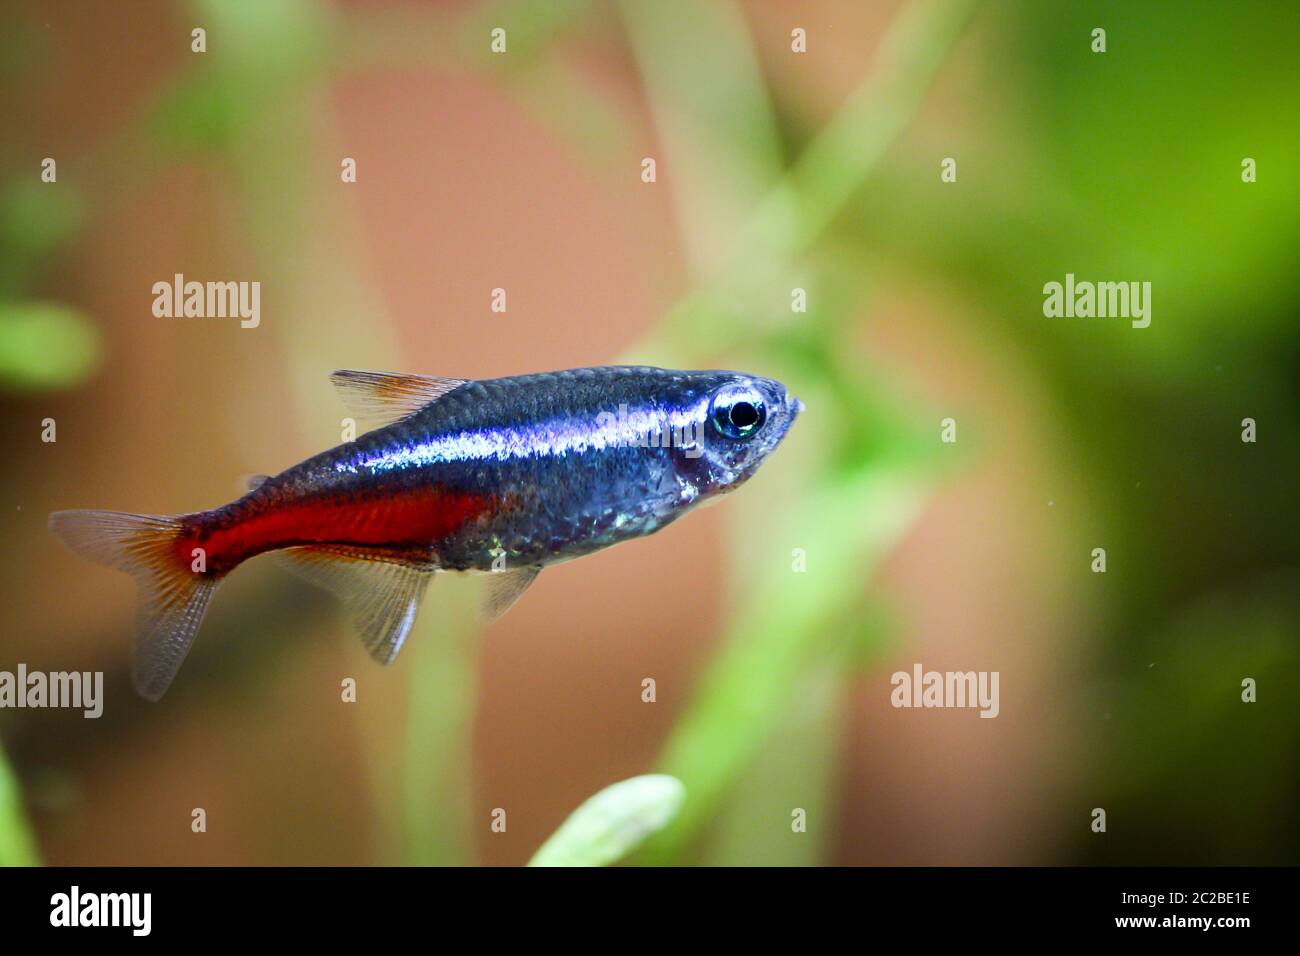 https://c8.alamy.com/comp/2C2BE1E/a-neon-fish-in-the-aquarium-2C2BE1E.jpg